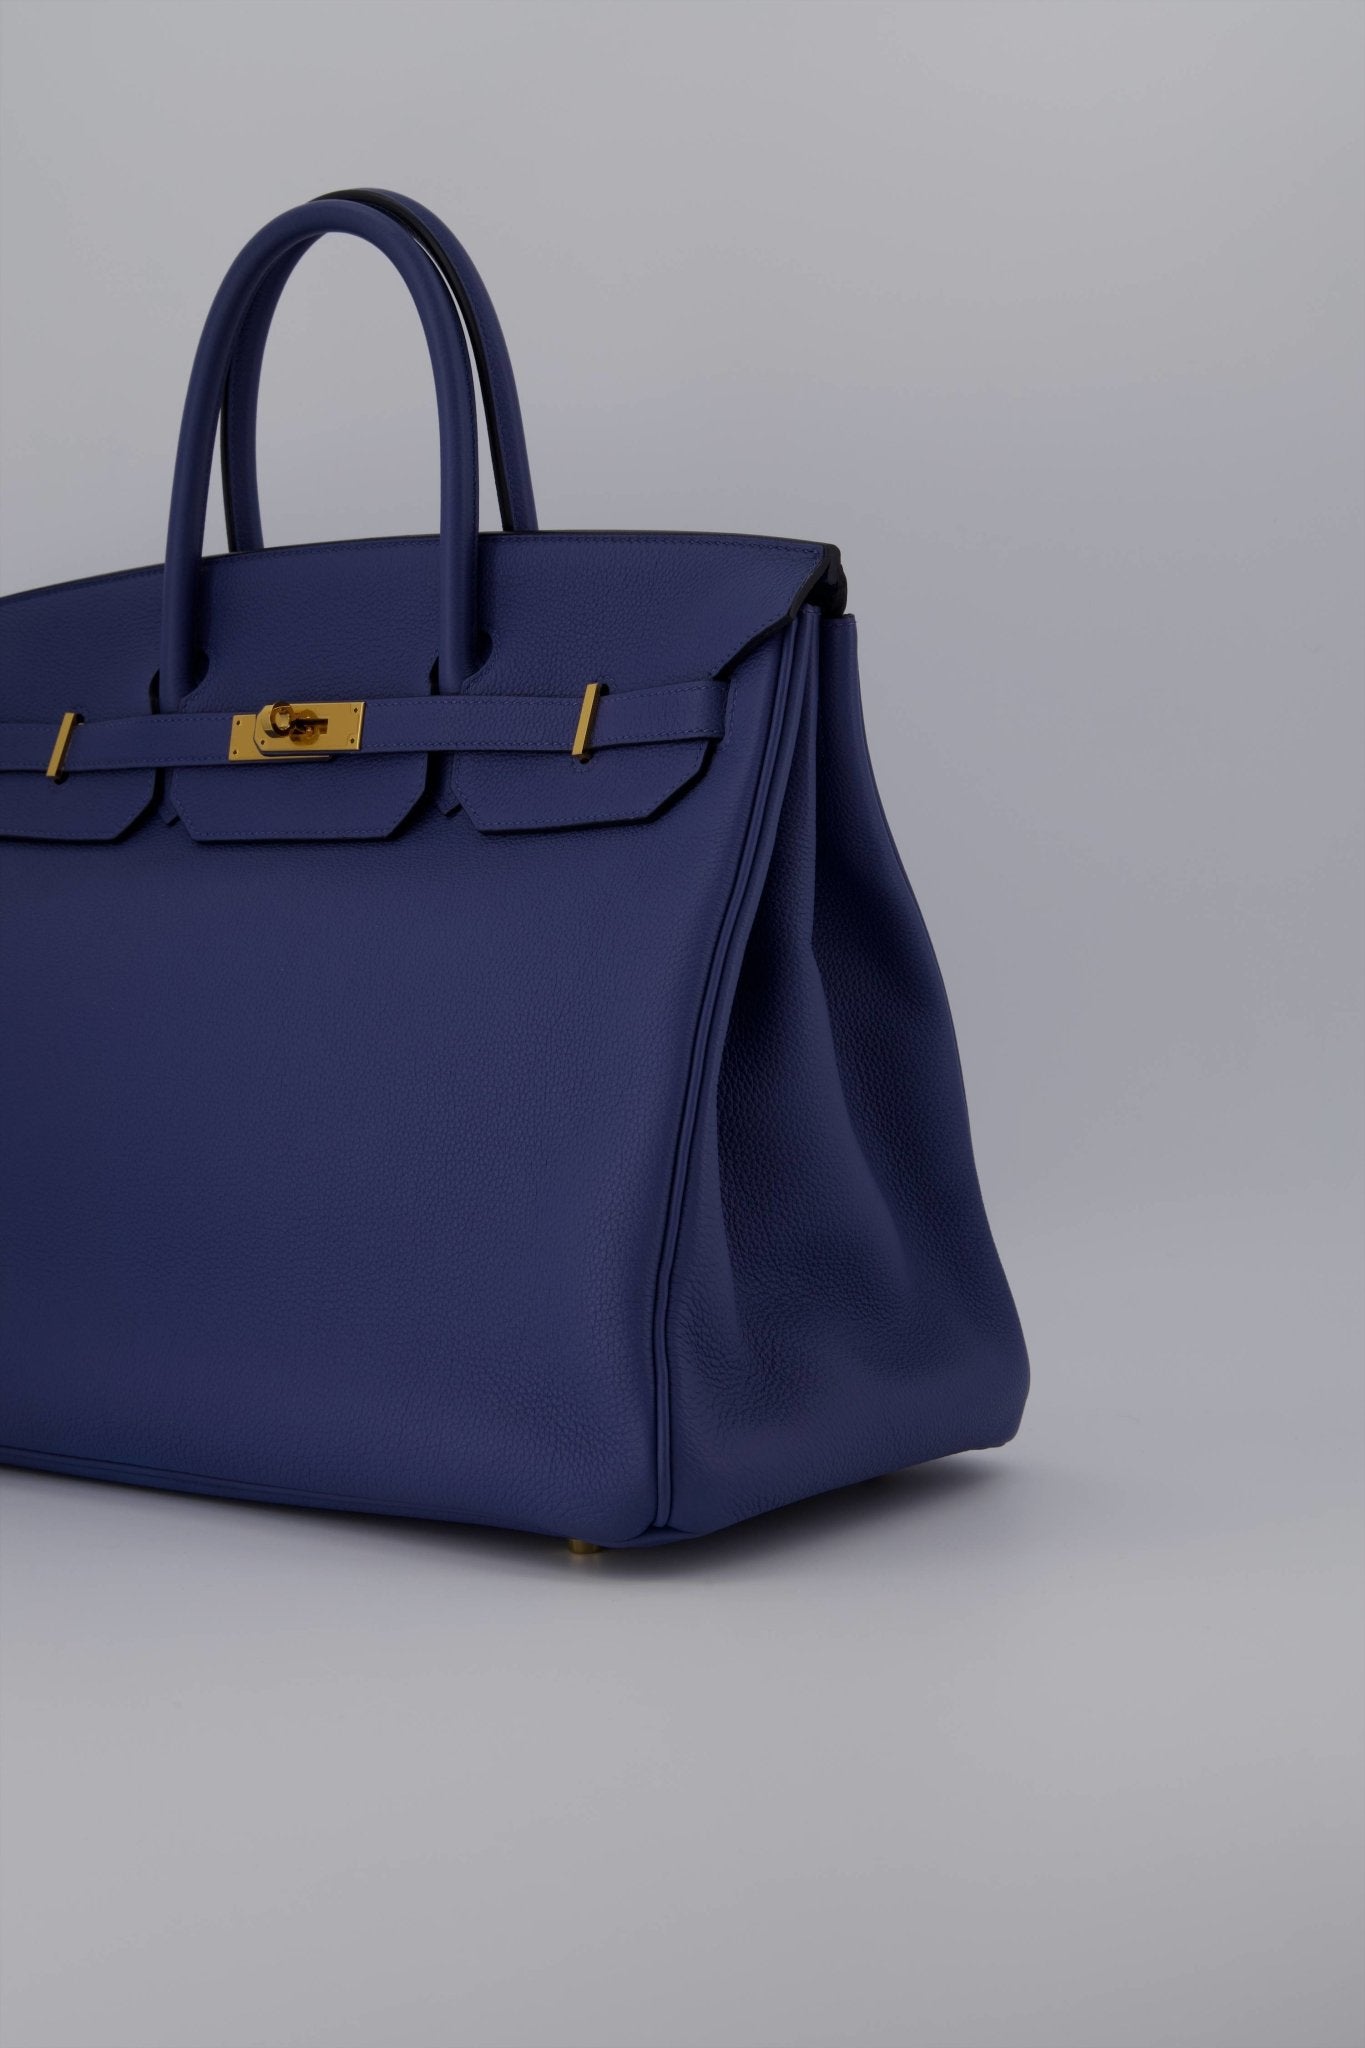 Debuting the Hermes Brighton Blue Birkin :) + Bags of La Greta of